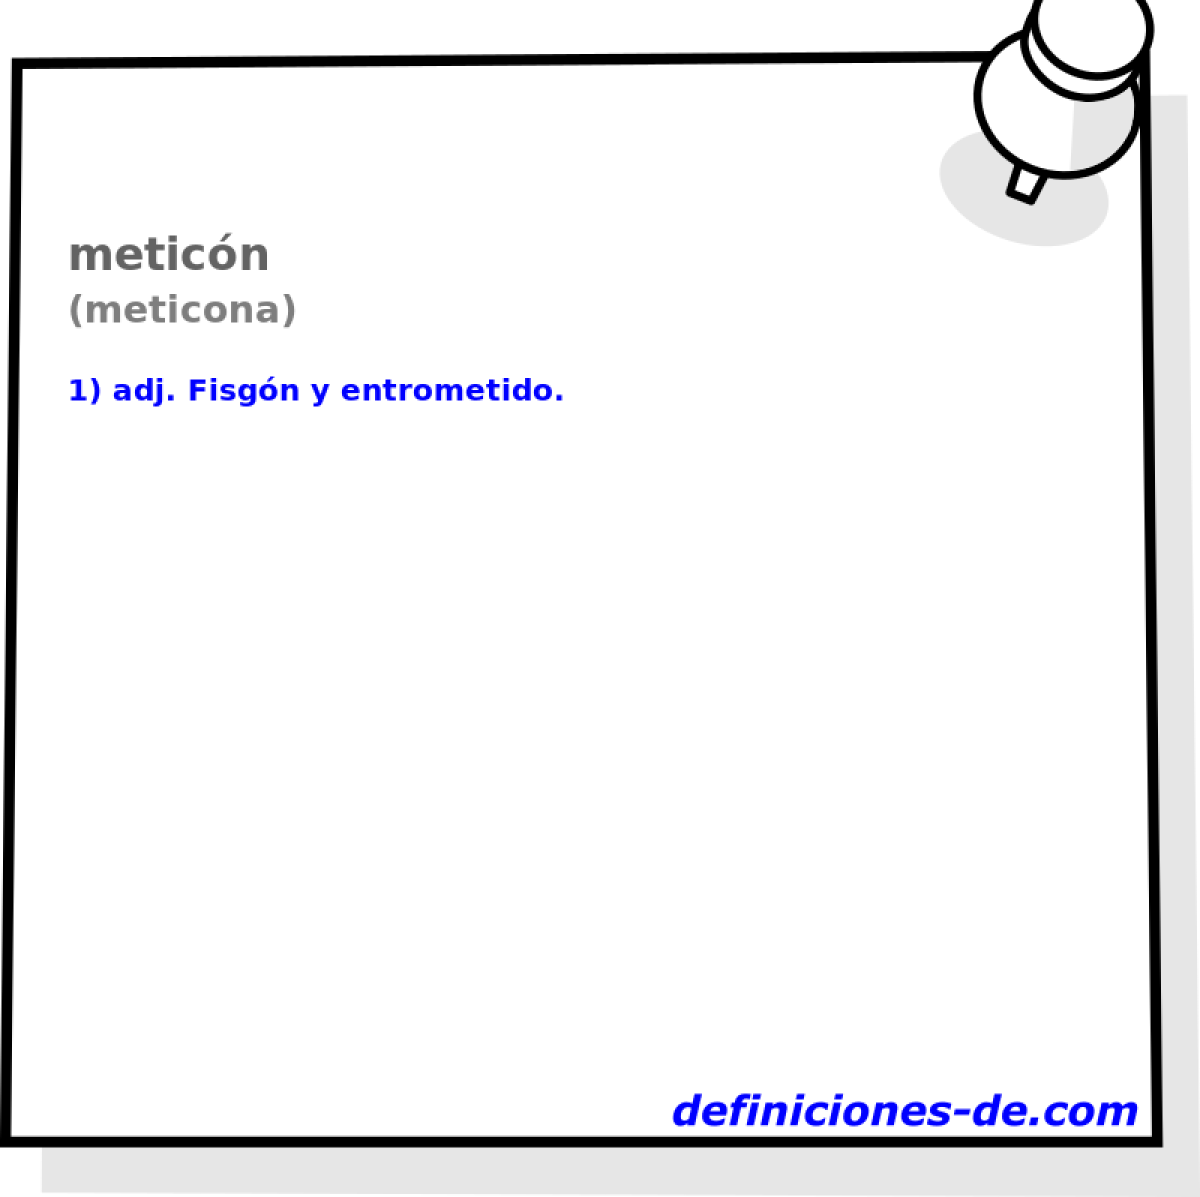 meticn (meticona)